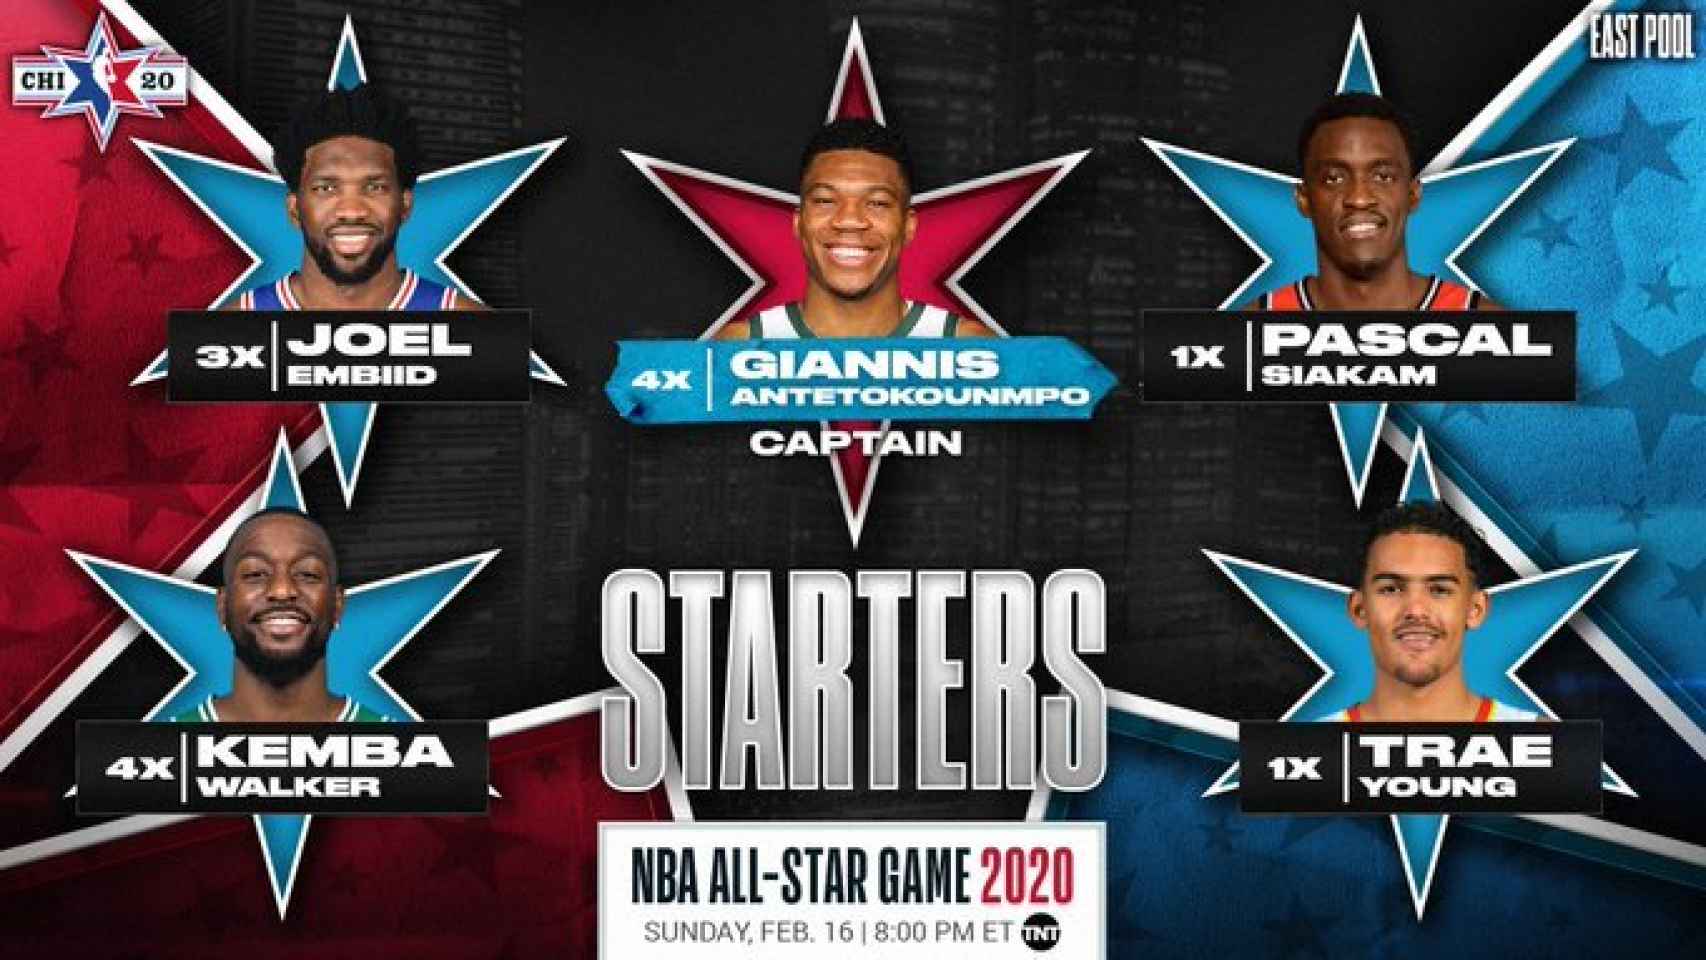 Quinteto titular del equipo del este del All Star 2020